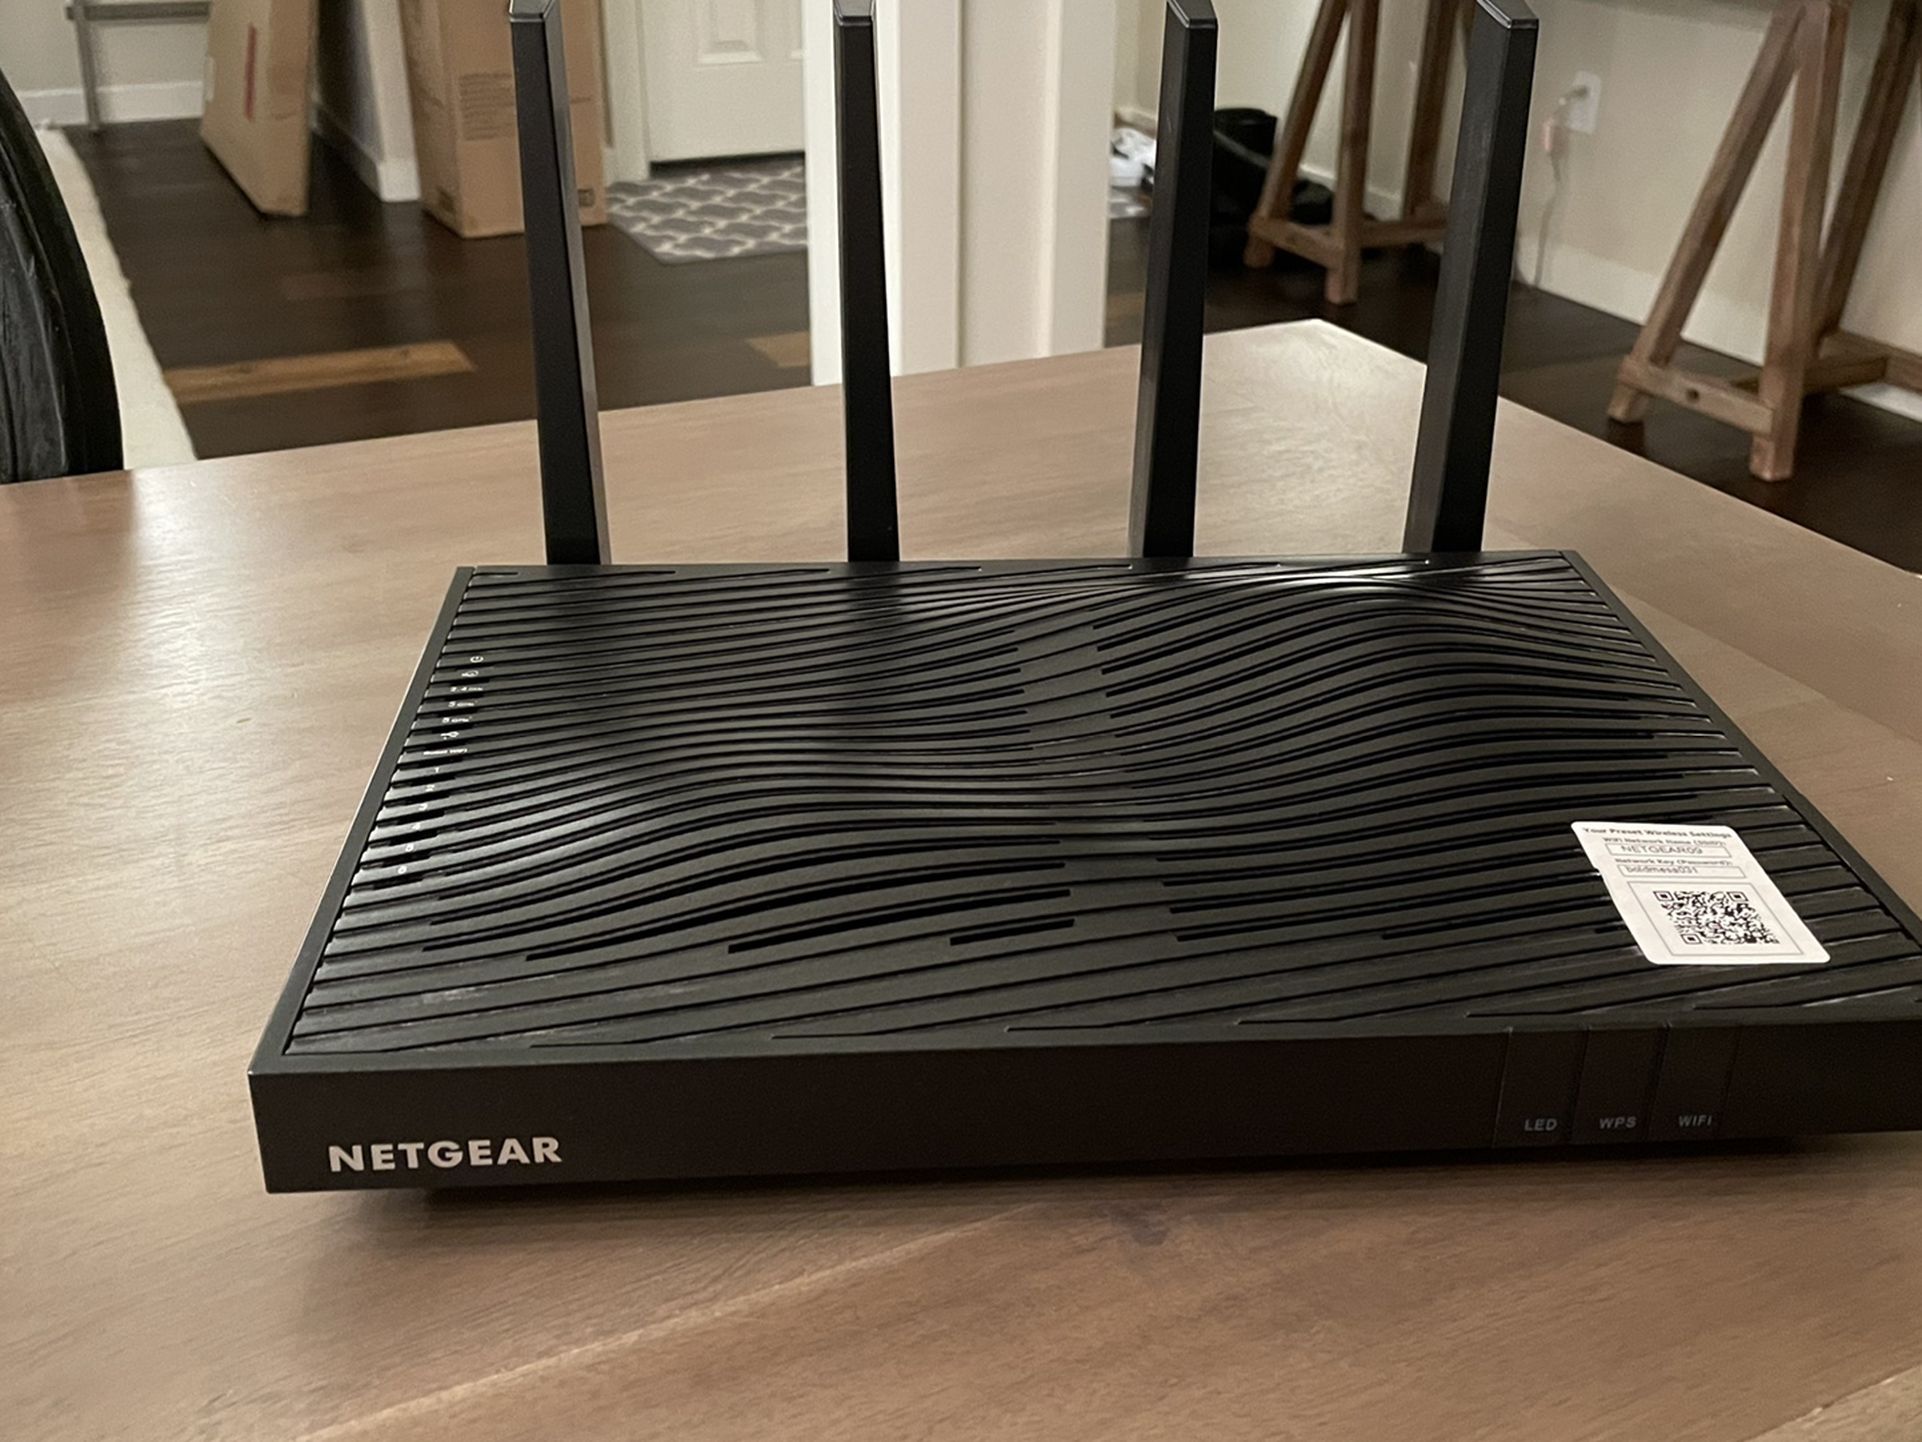 NETGEAR Nighthawk X8 AC5000 Tri-band WiFi Router, Gigabit Ethernet, MU-MIMO